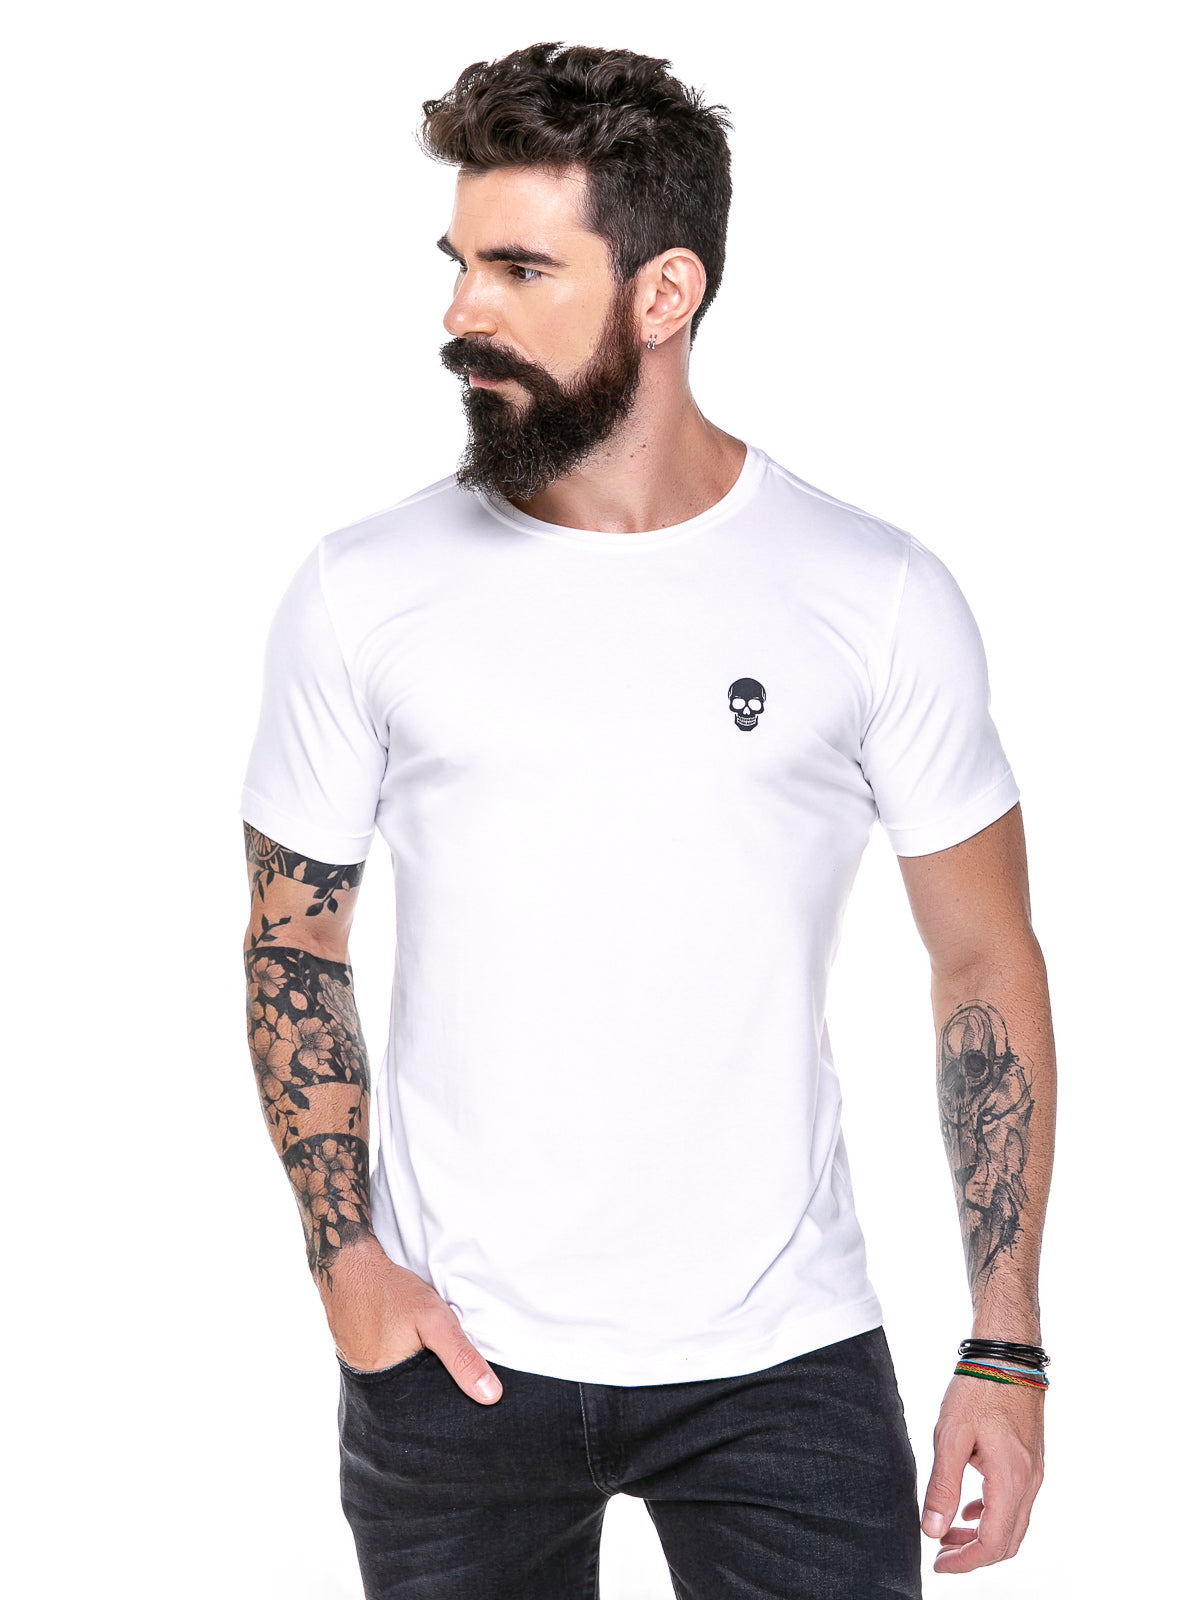 Camiseta masculina Skull - branca